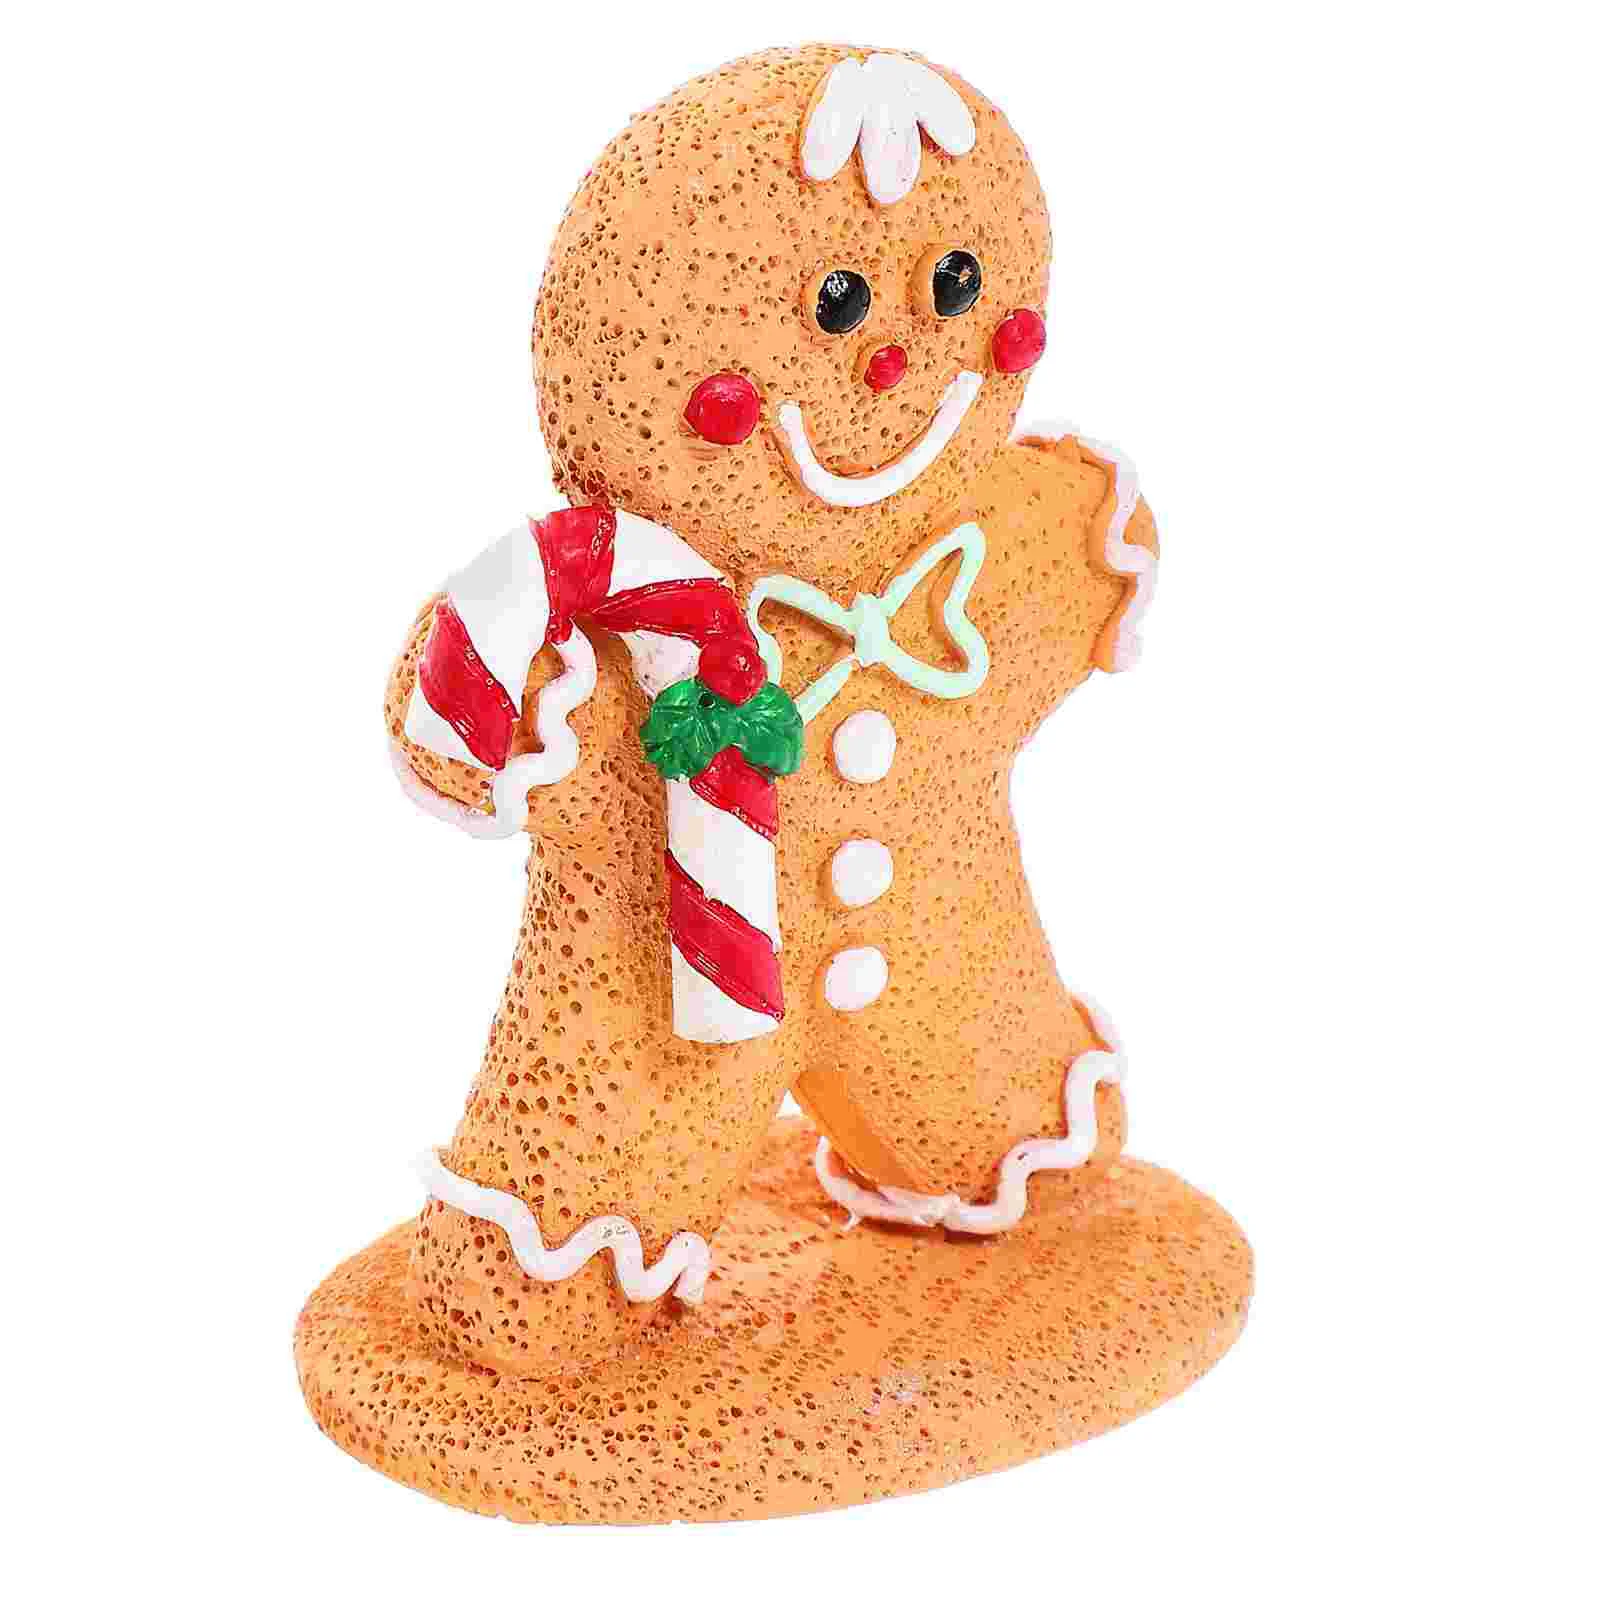 

Accessories Child Nativity Ornament Gingerbread Santa Figurine Resin Tabletop Christmas Man